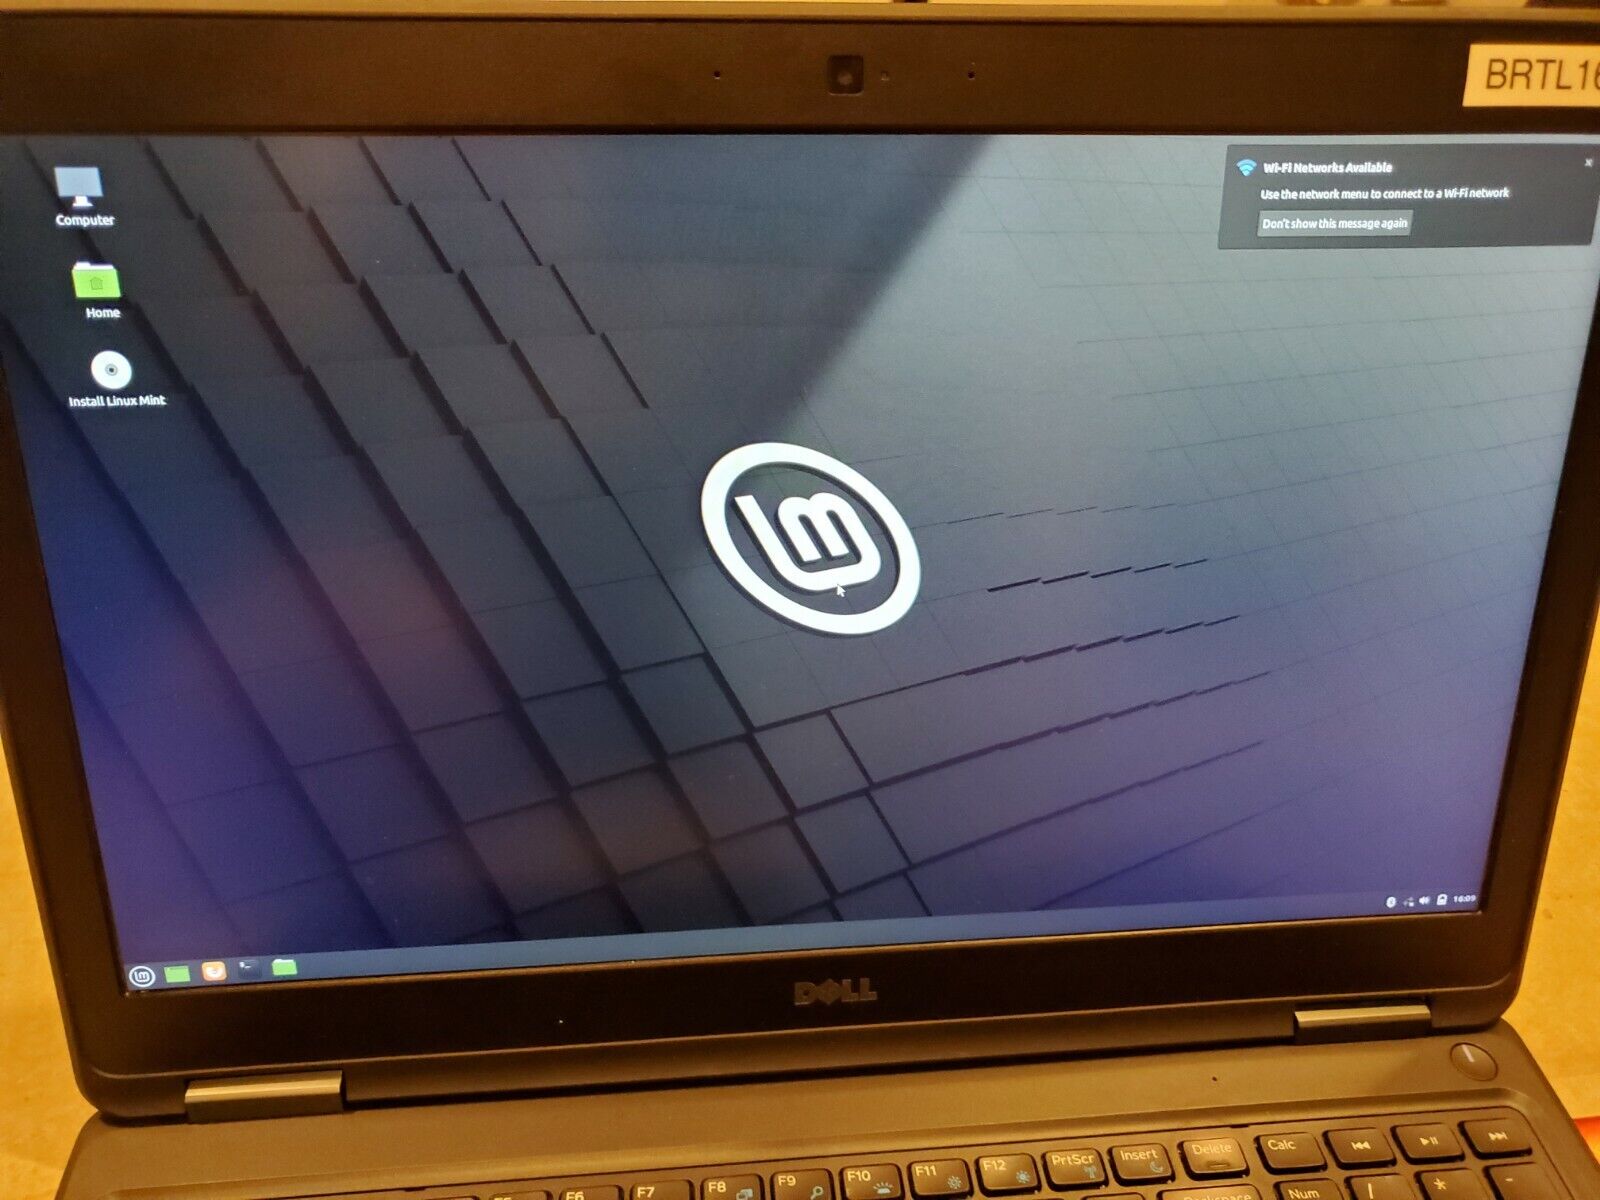 Linux Mint 20.2 Cinnamon x64 Bootable on 32G USB Stick